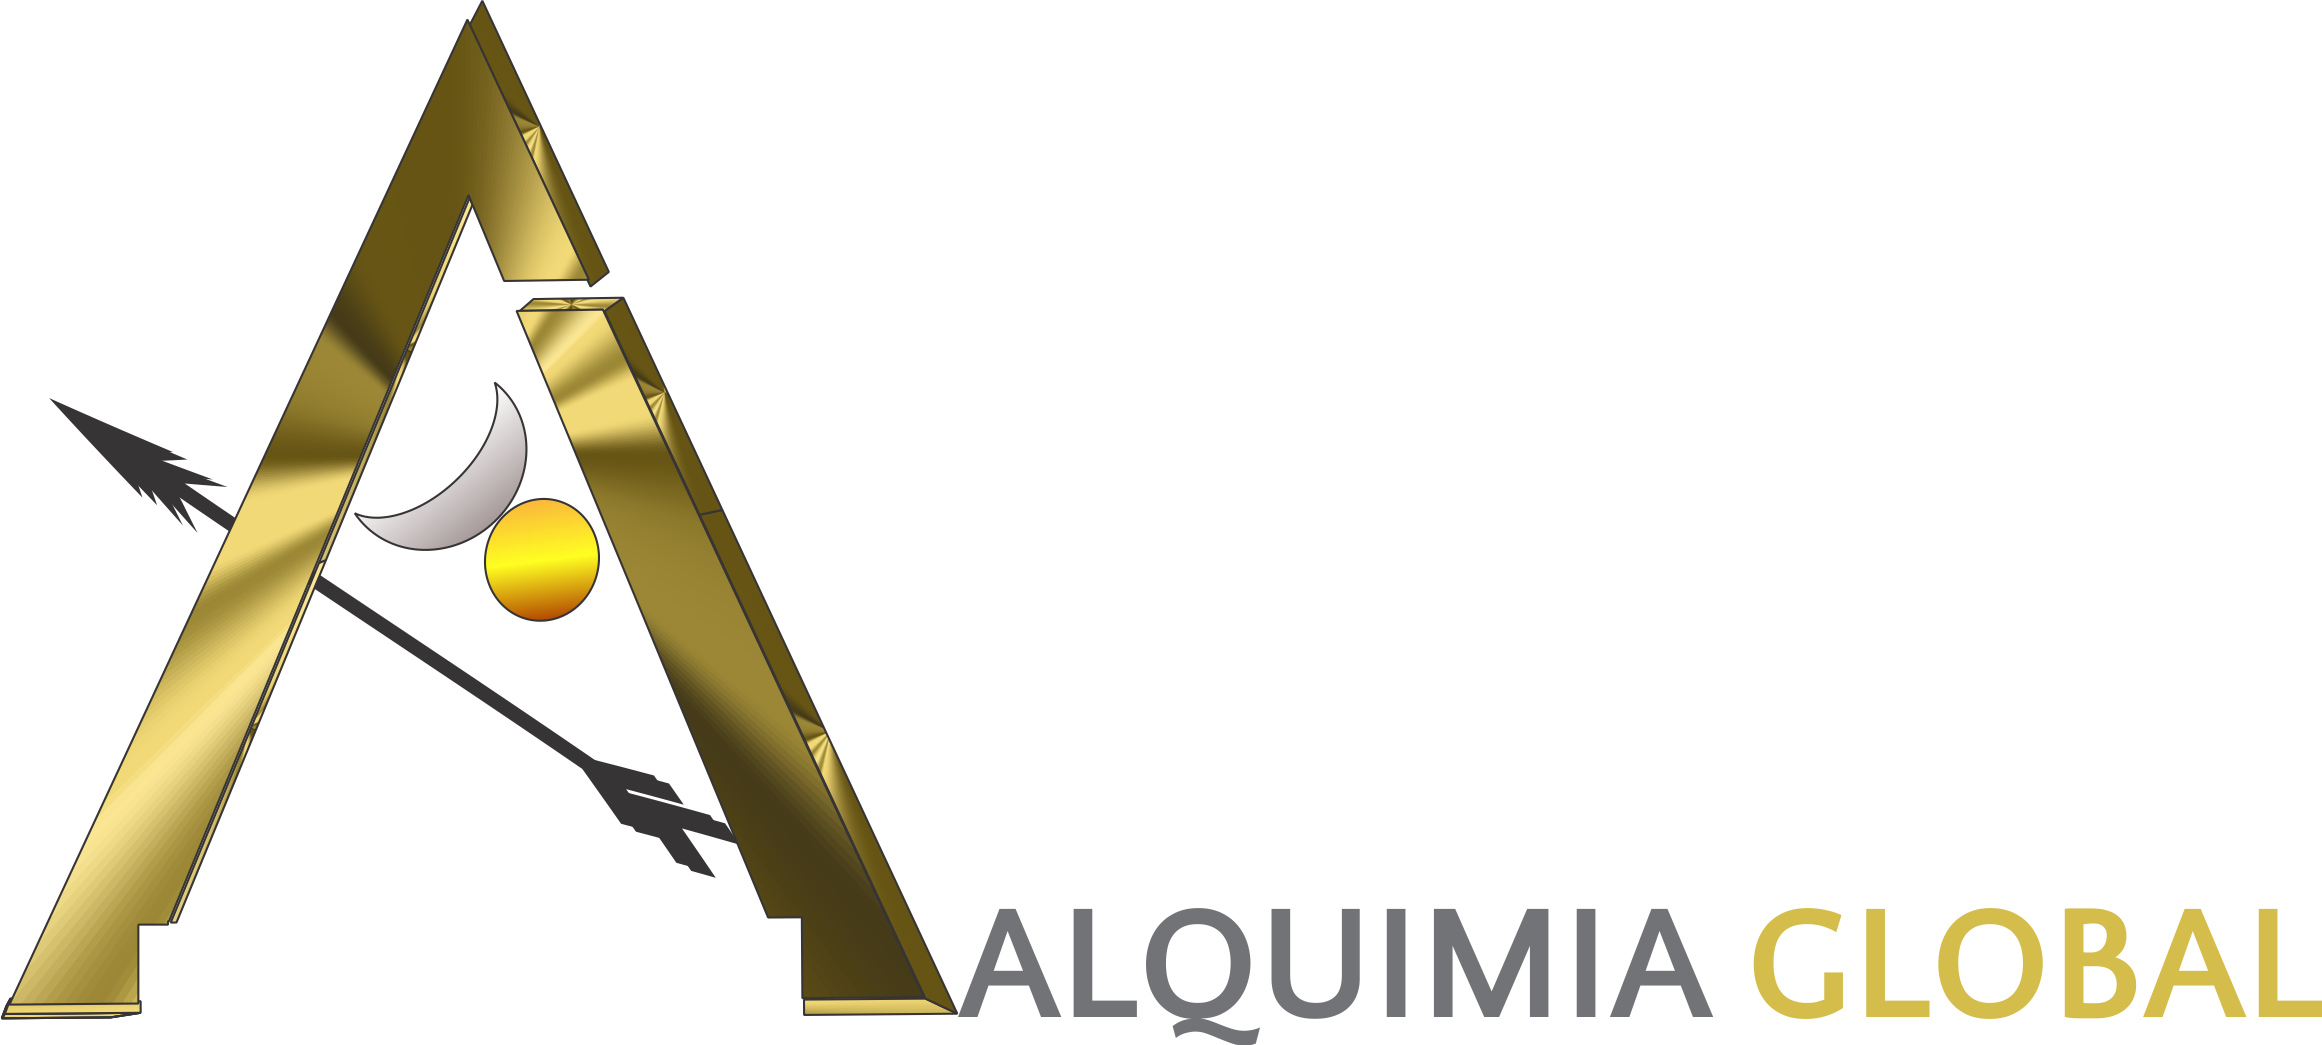 Alquimia Global logo